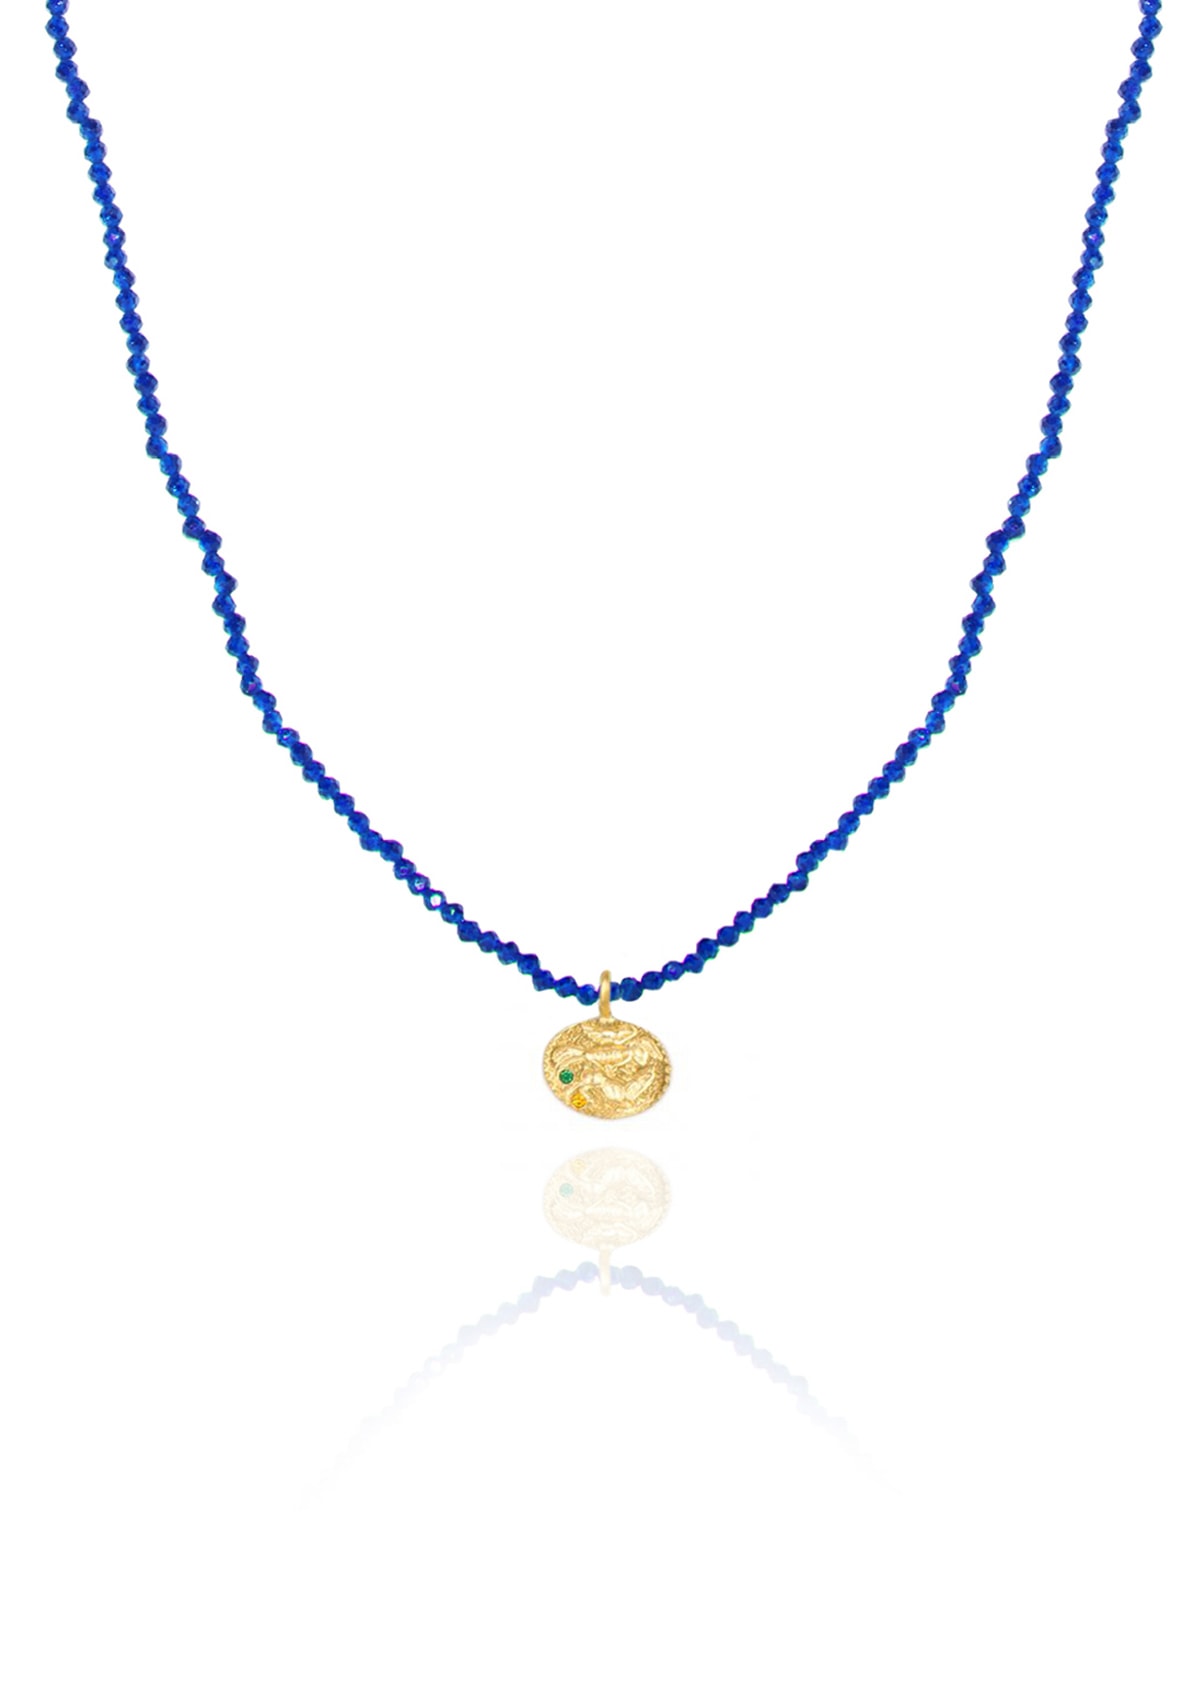 Sealstone Runner Blue Necklace